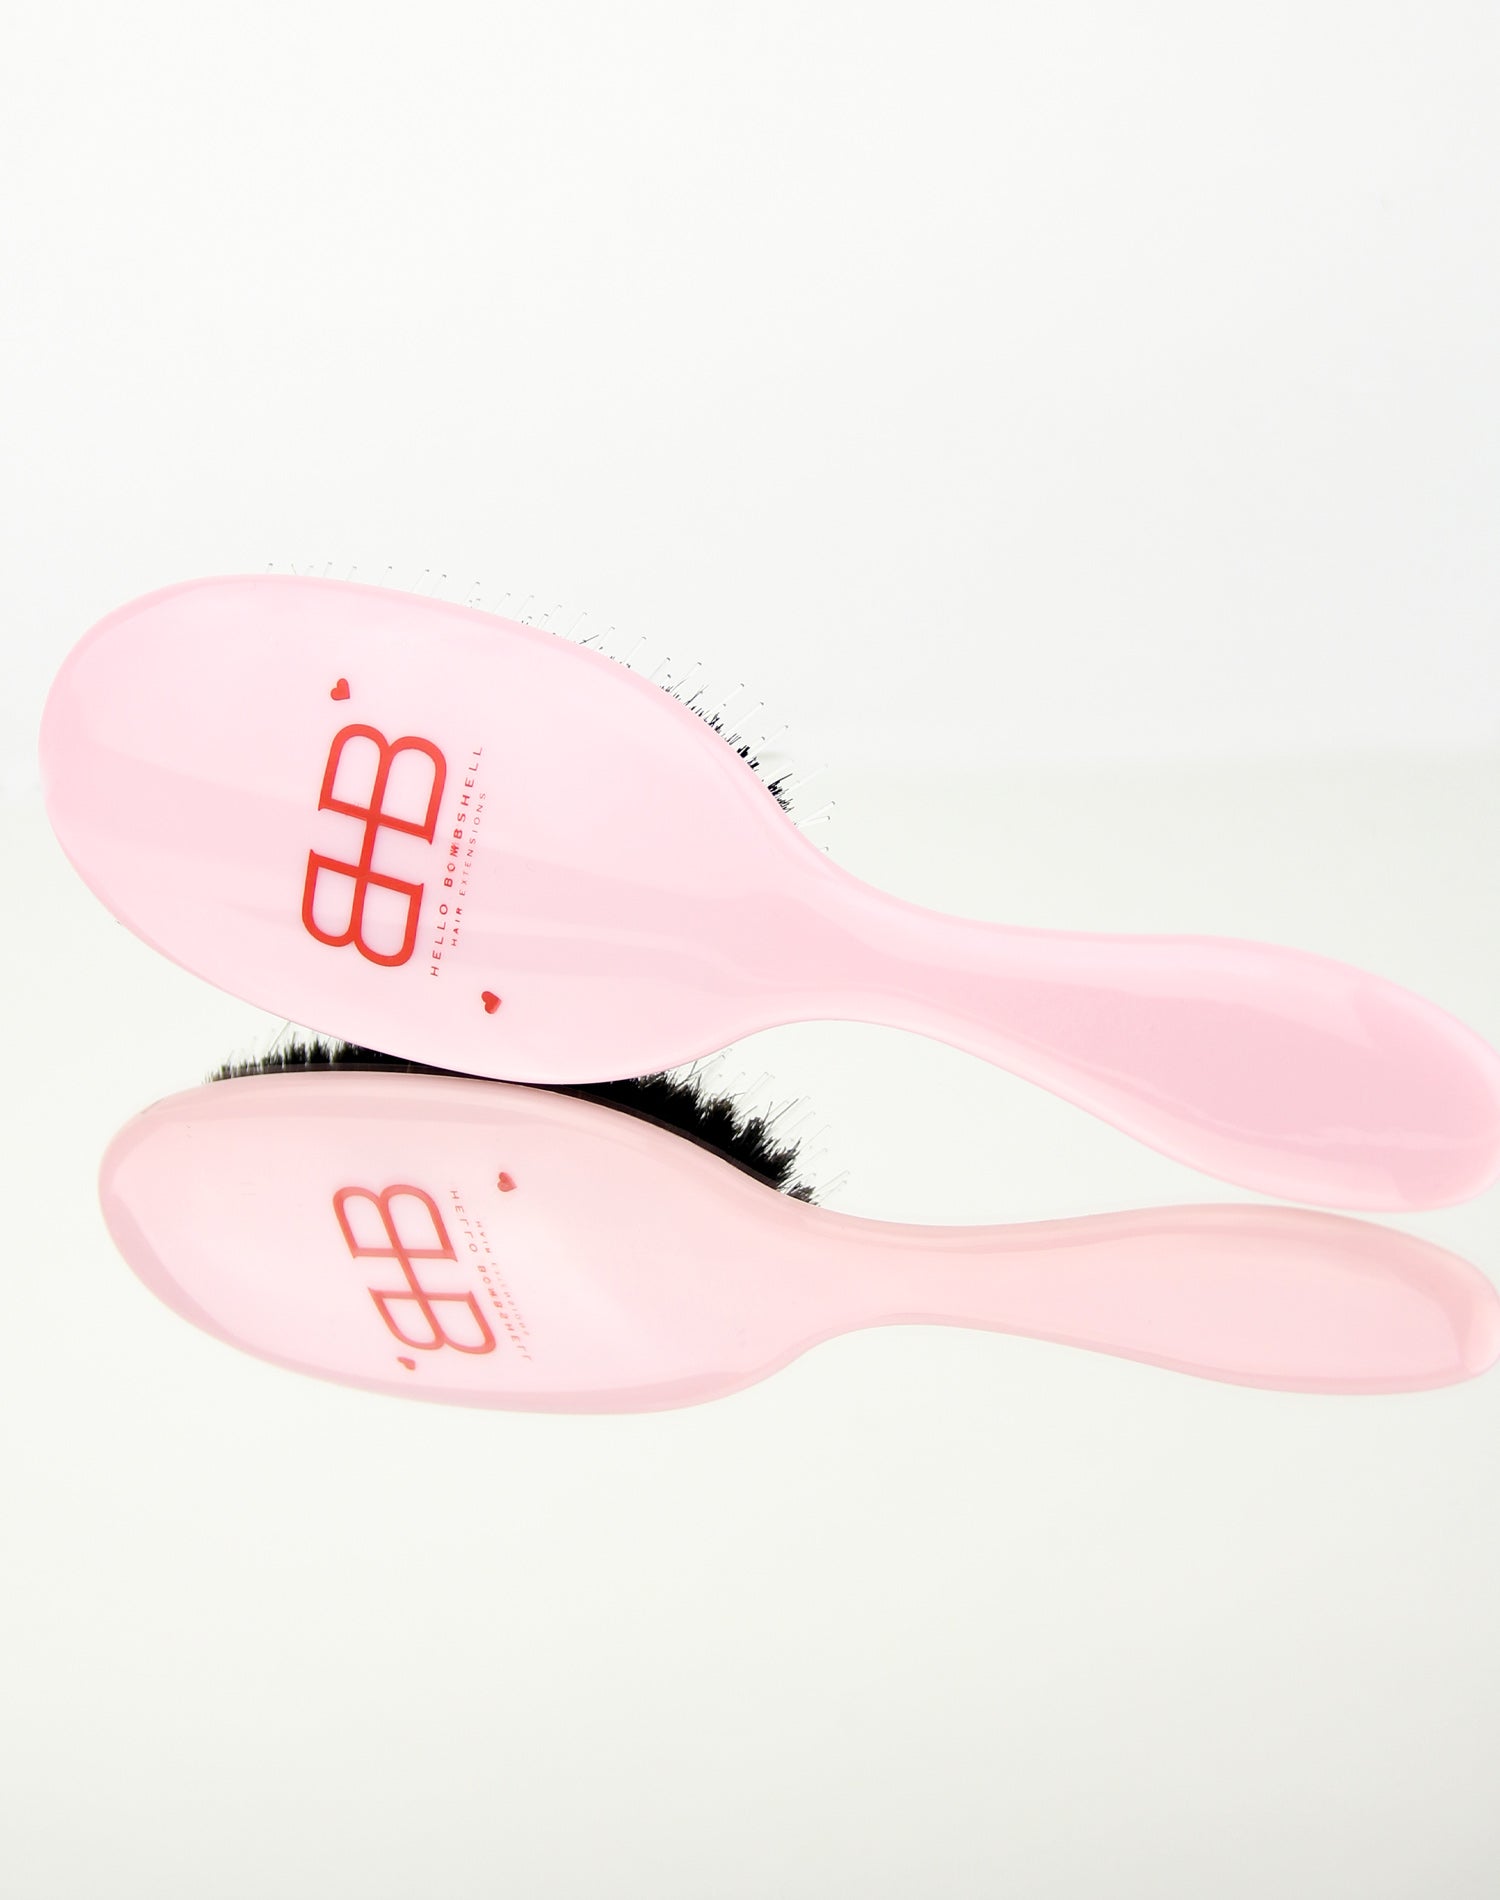 Bombshells - Pink Peony Hairbrush